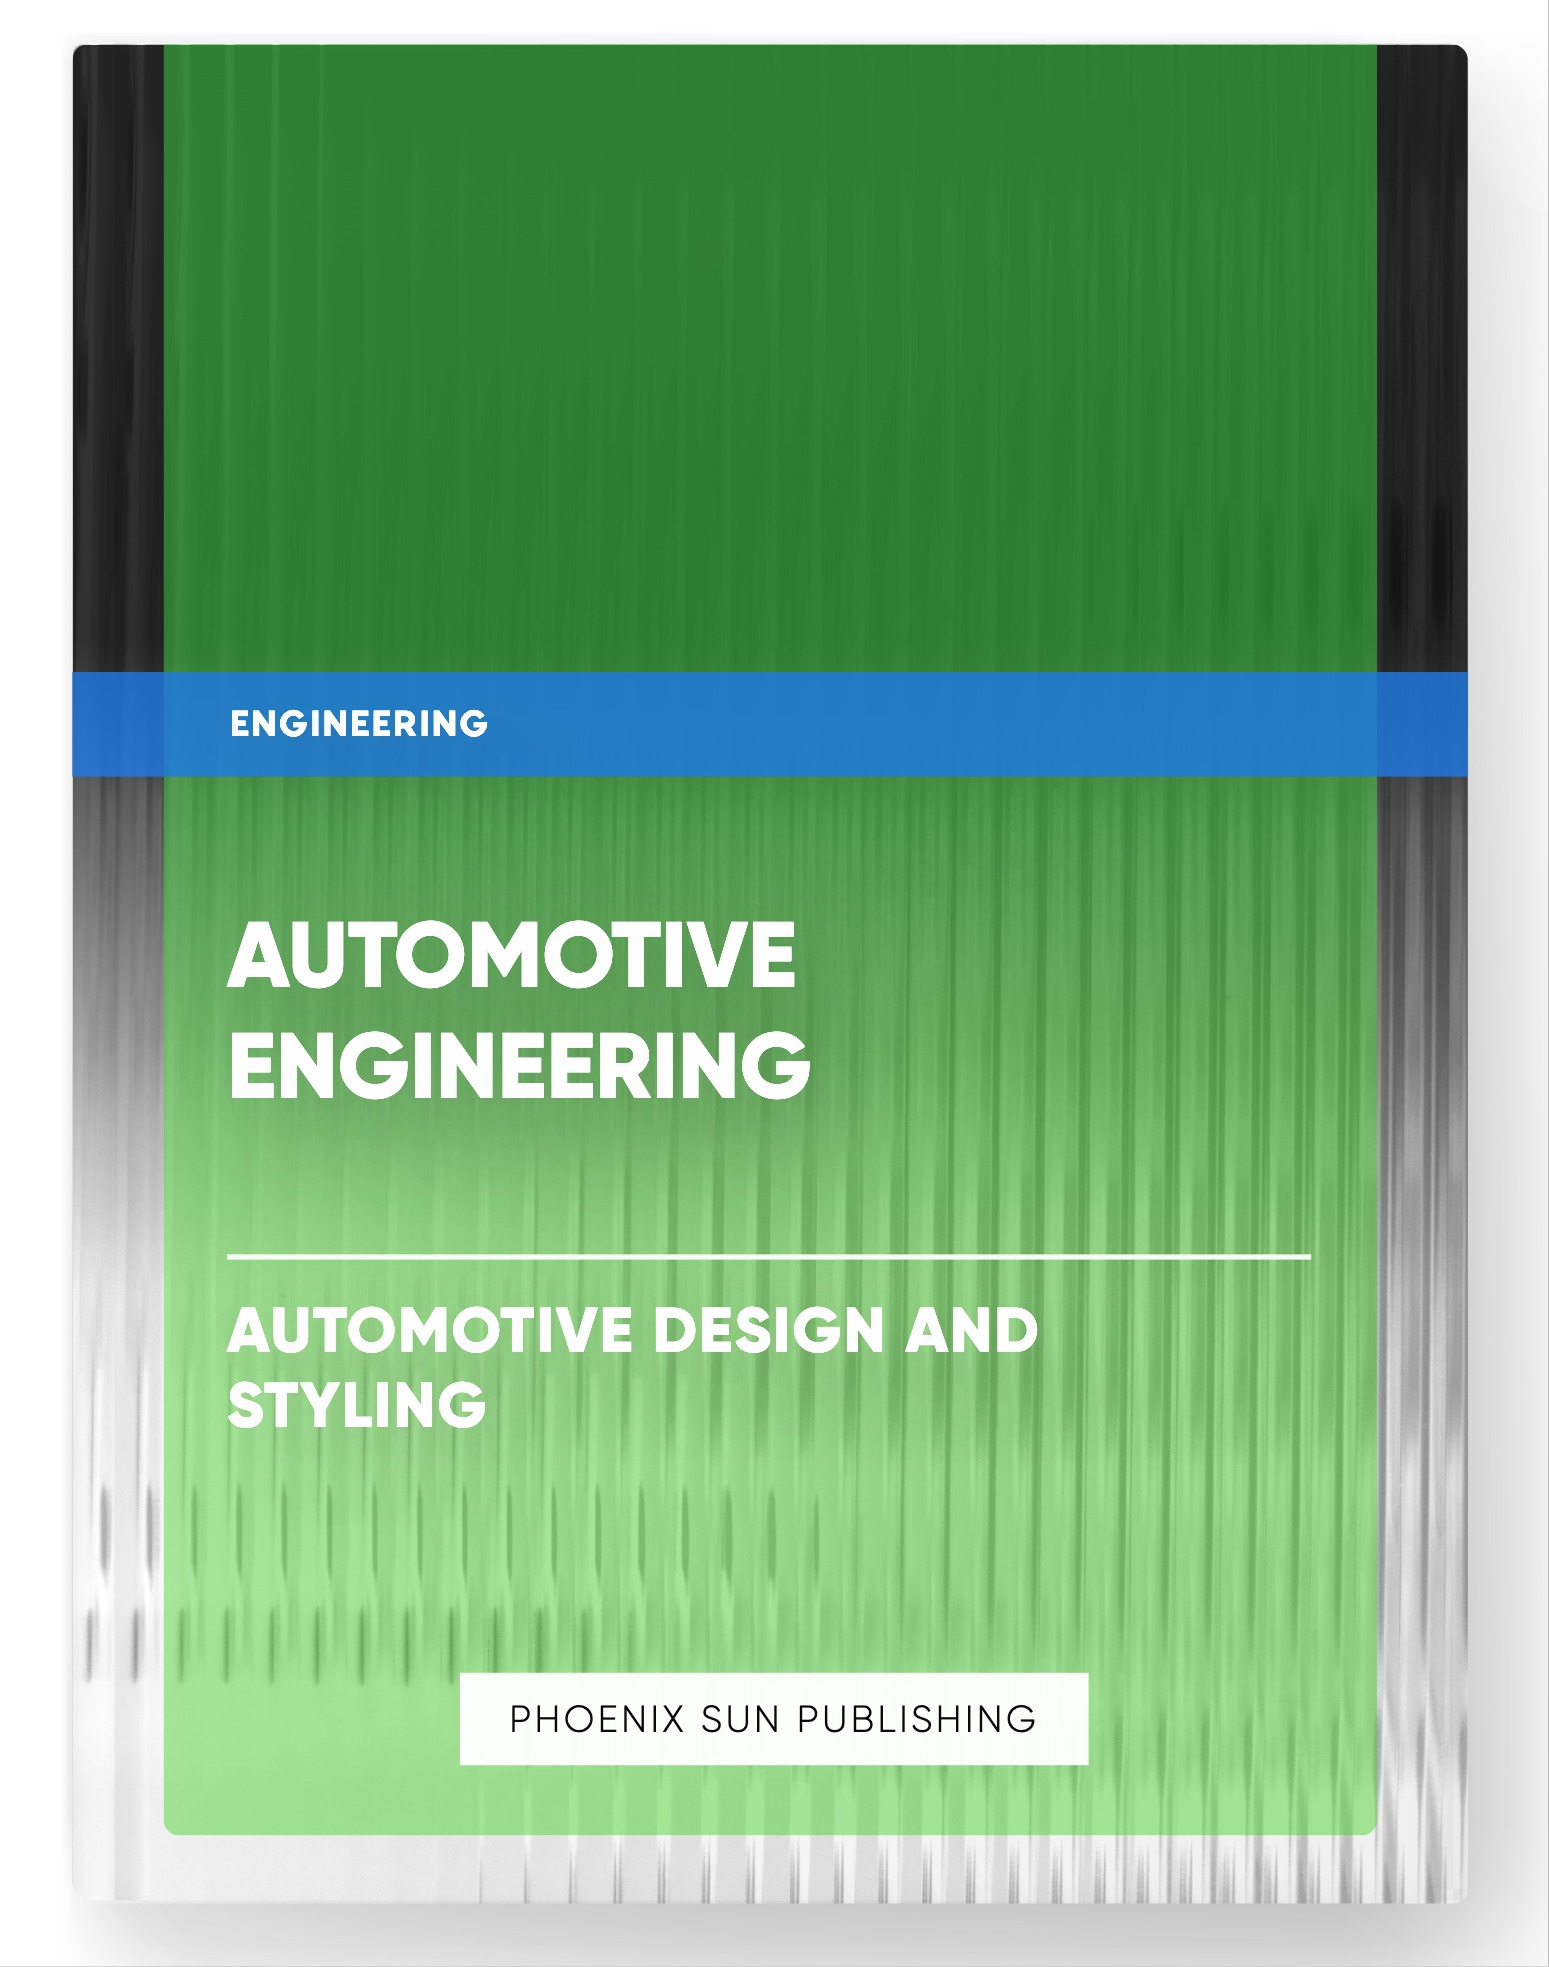 Automotive Engineering – Automotive Design and Styling